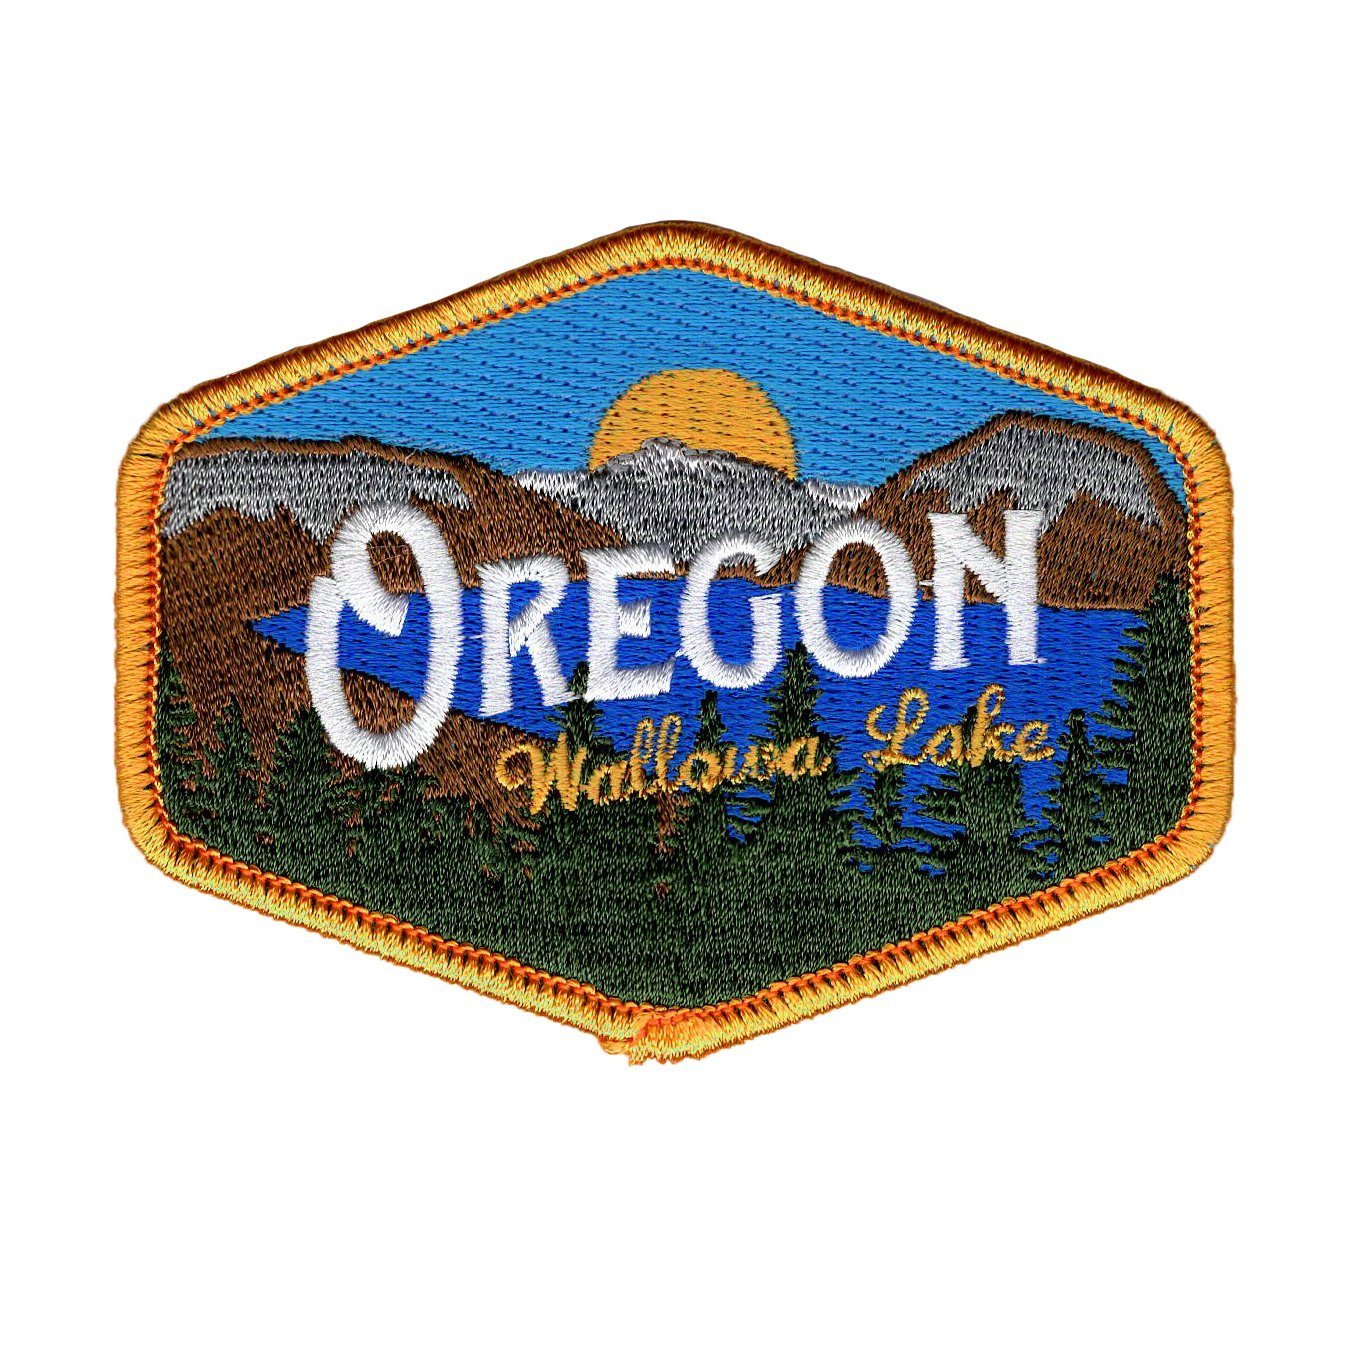 Oregon Wallowa Lake Vintage | Embroidered Patch